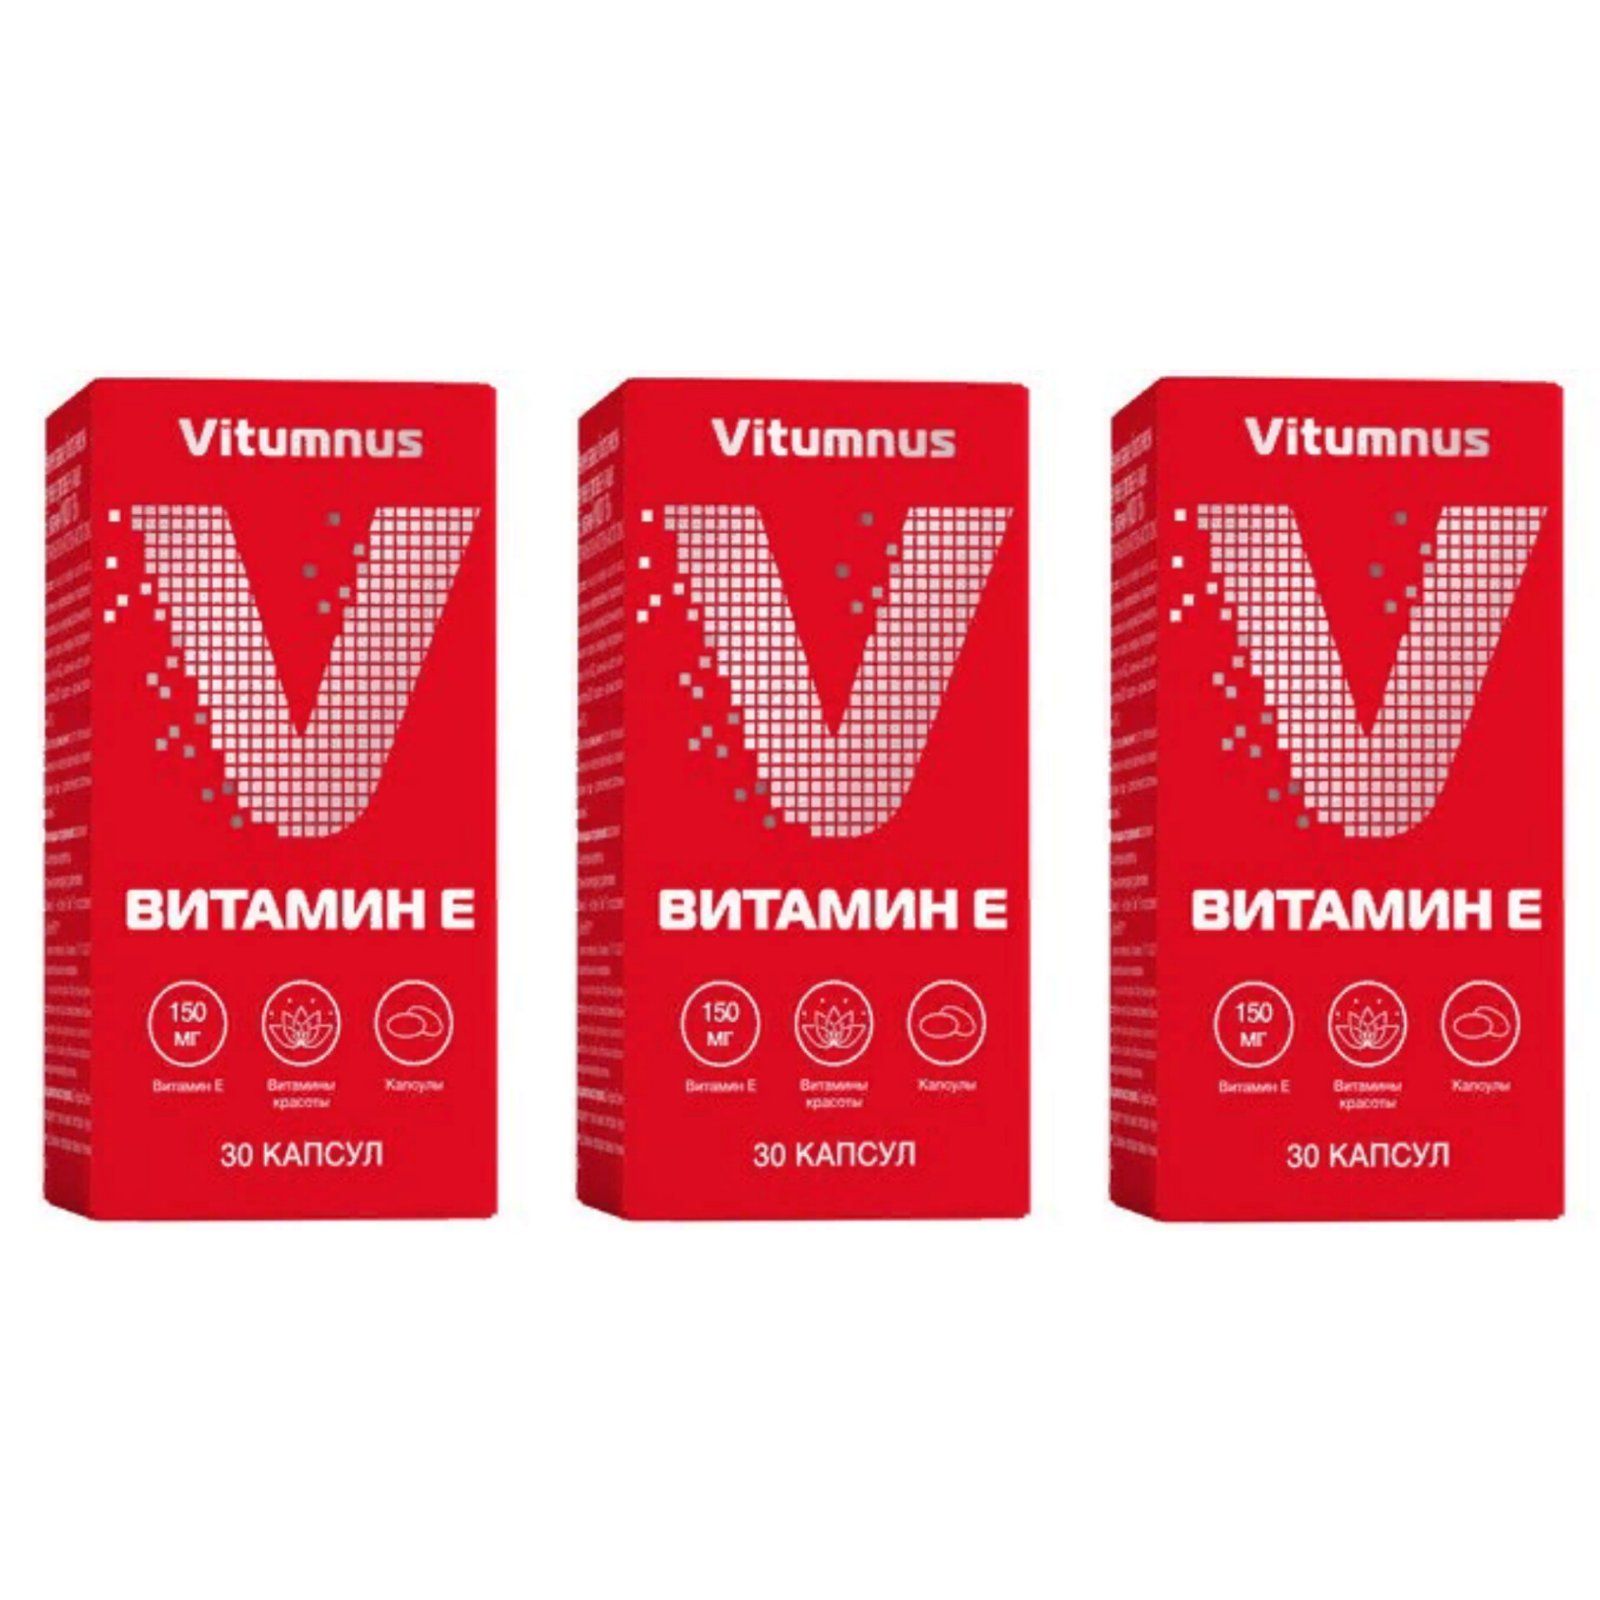 Vitumnus д3 витамин. Vitumnus витамины. Витамин е 0,4 n30 капс. Vitumnus для мужчин. Vitumnus витамины для мужчин.